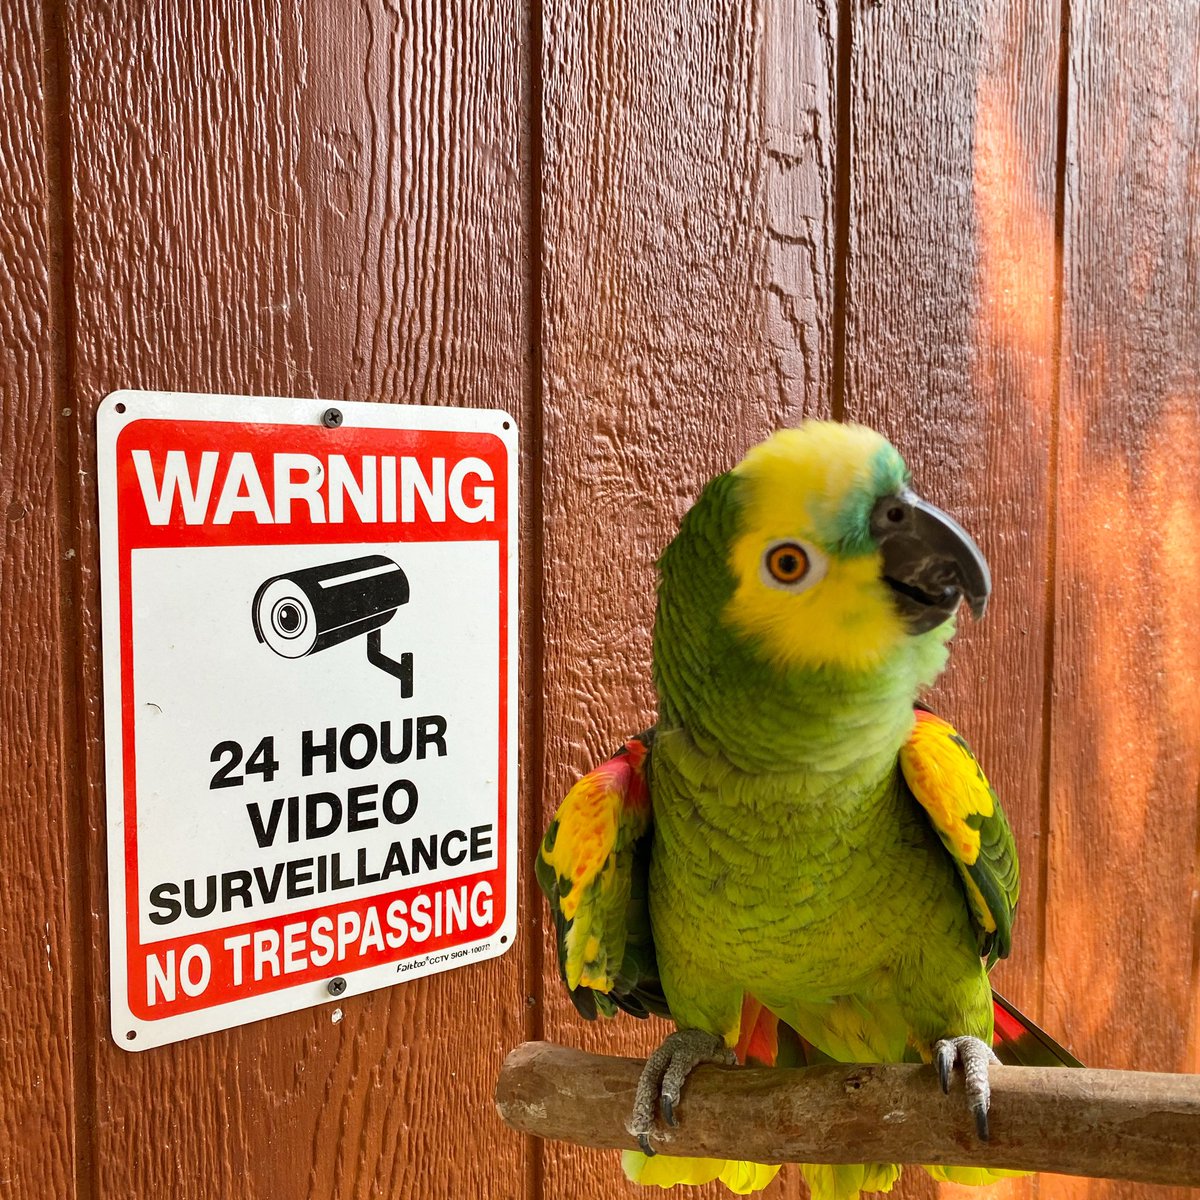 My mom got the warning ⛔️ part right. 😂 #aggressiveparrot #trex #boothebluefrontedamazon #amazon #amazonparrot #boo #hormones #warning #birds #parrots #texasparrotrescue